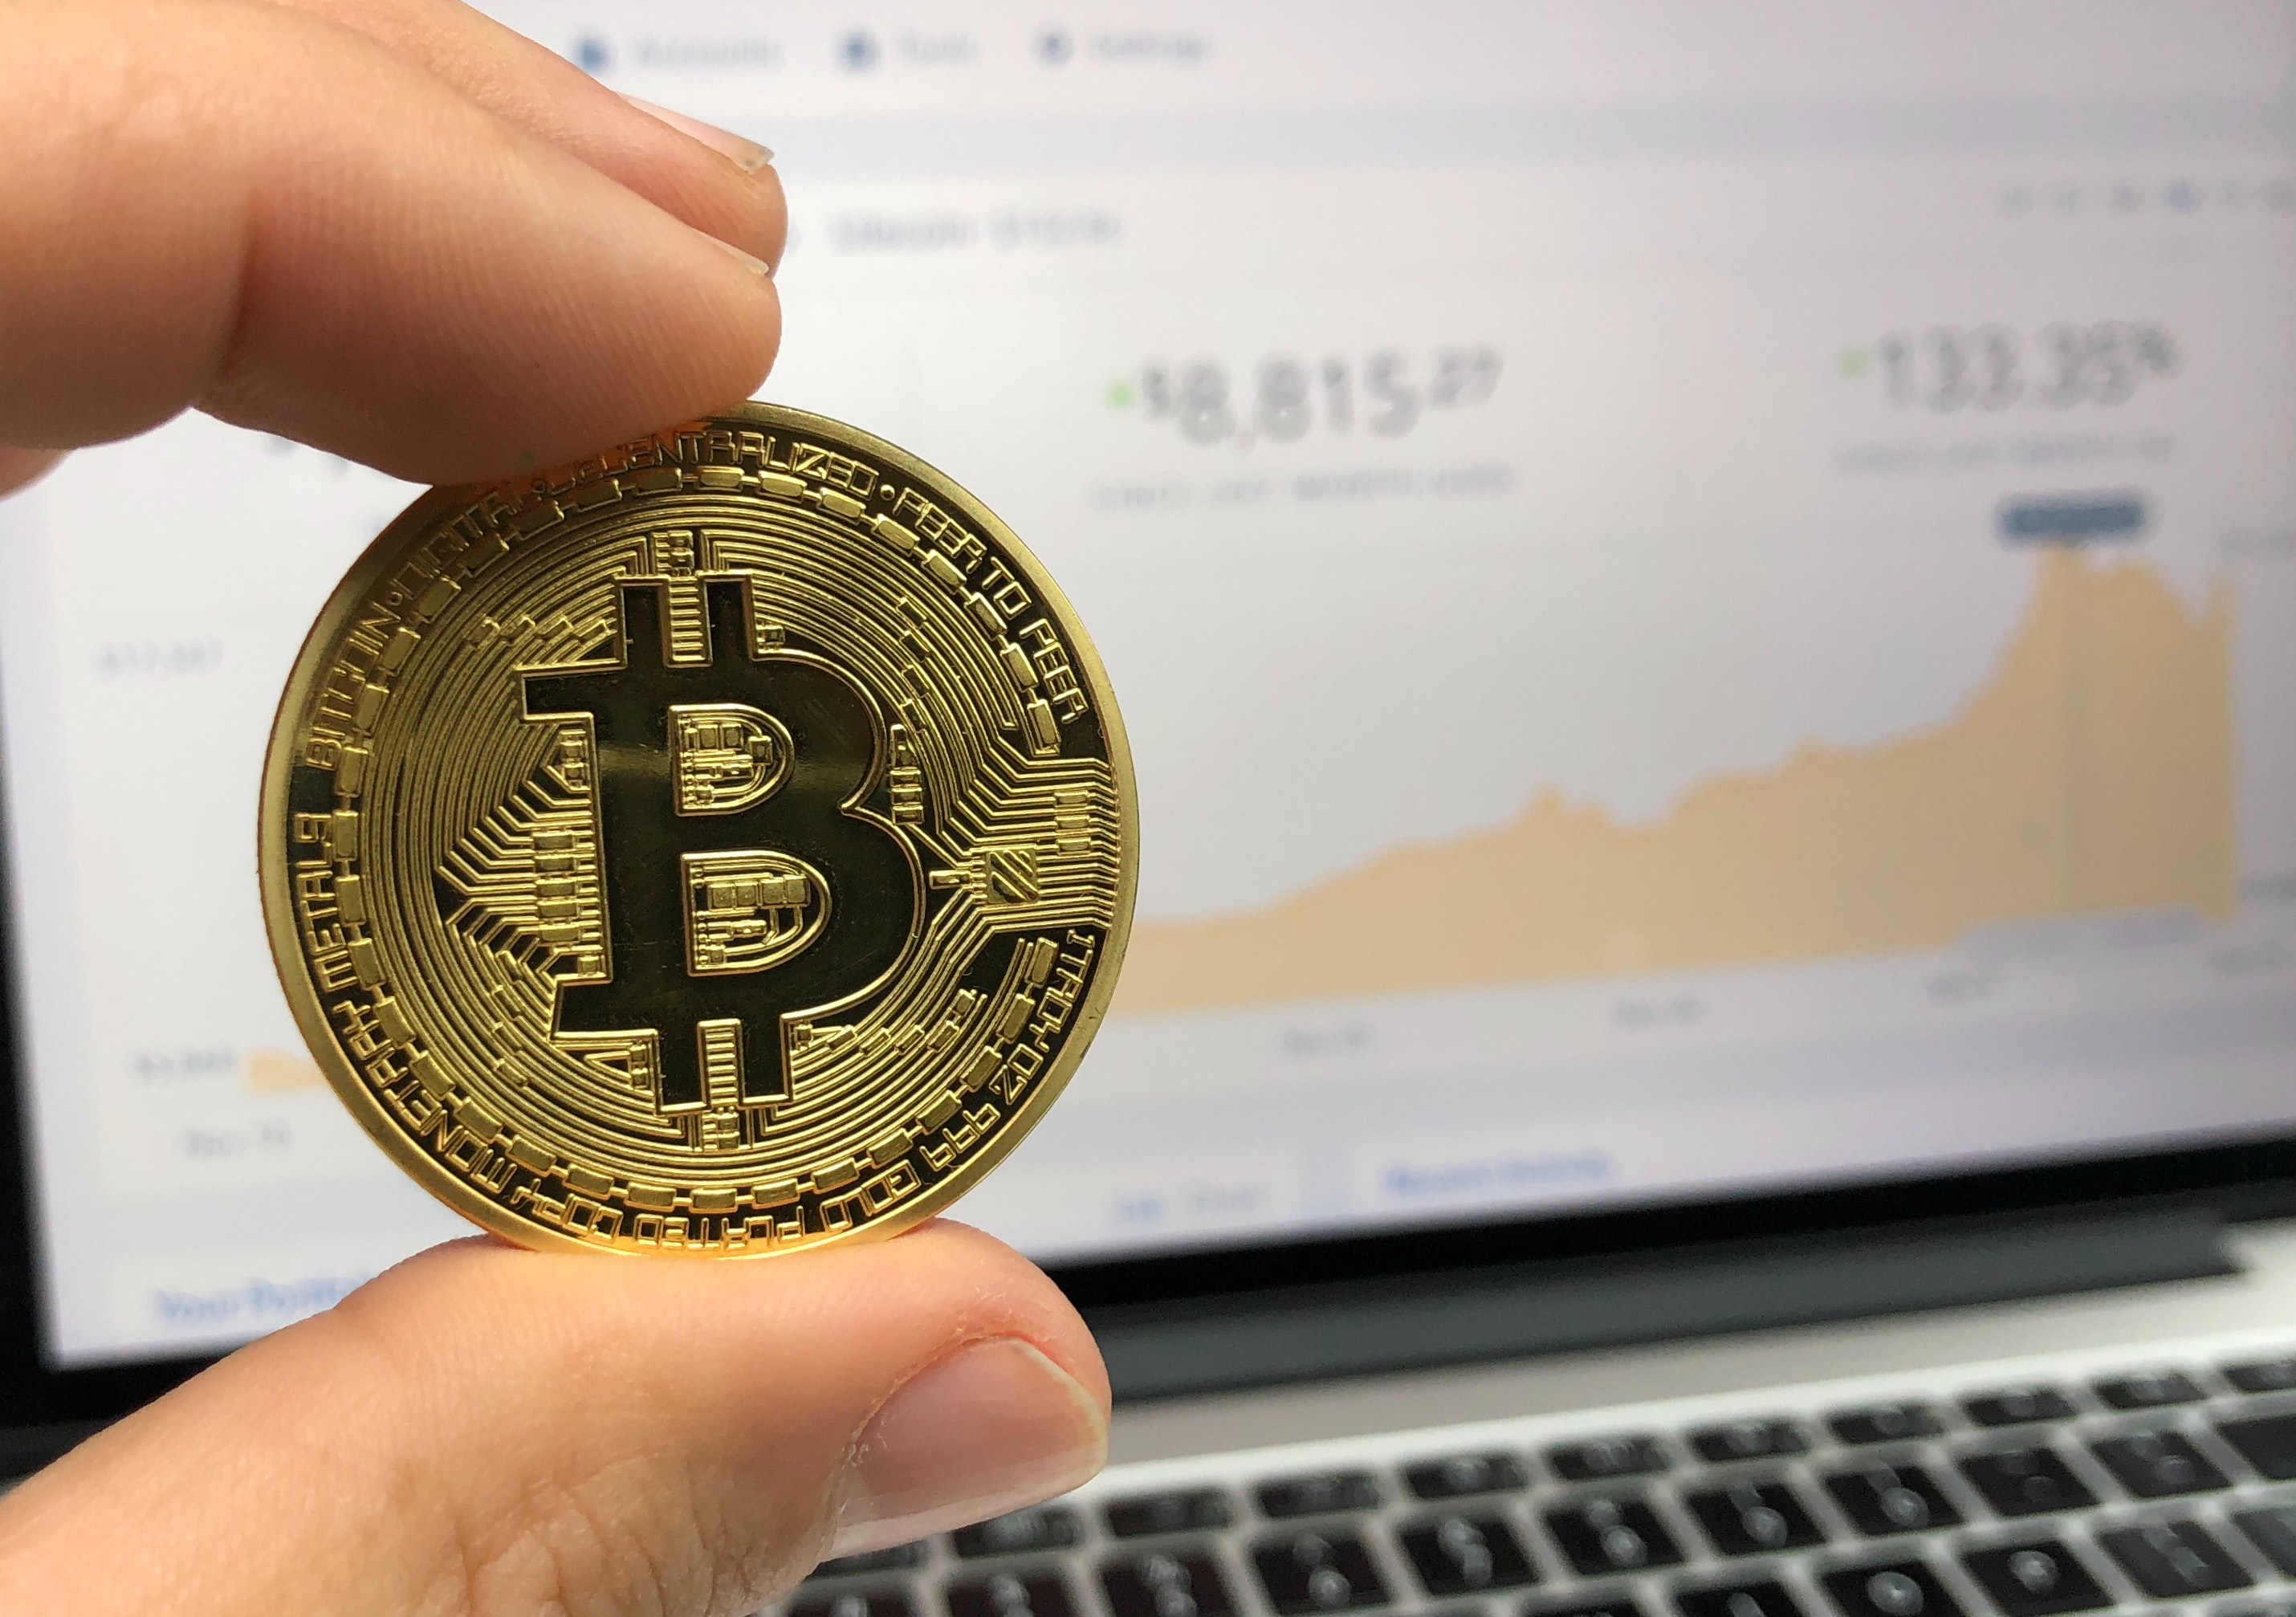 How to buy your first bitcoin обмен биткоин спб восстания